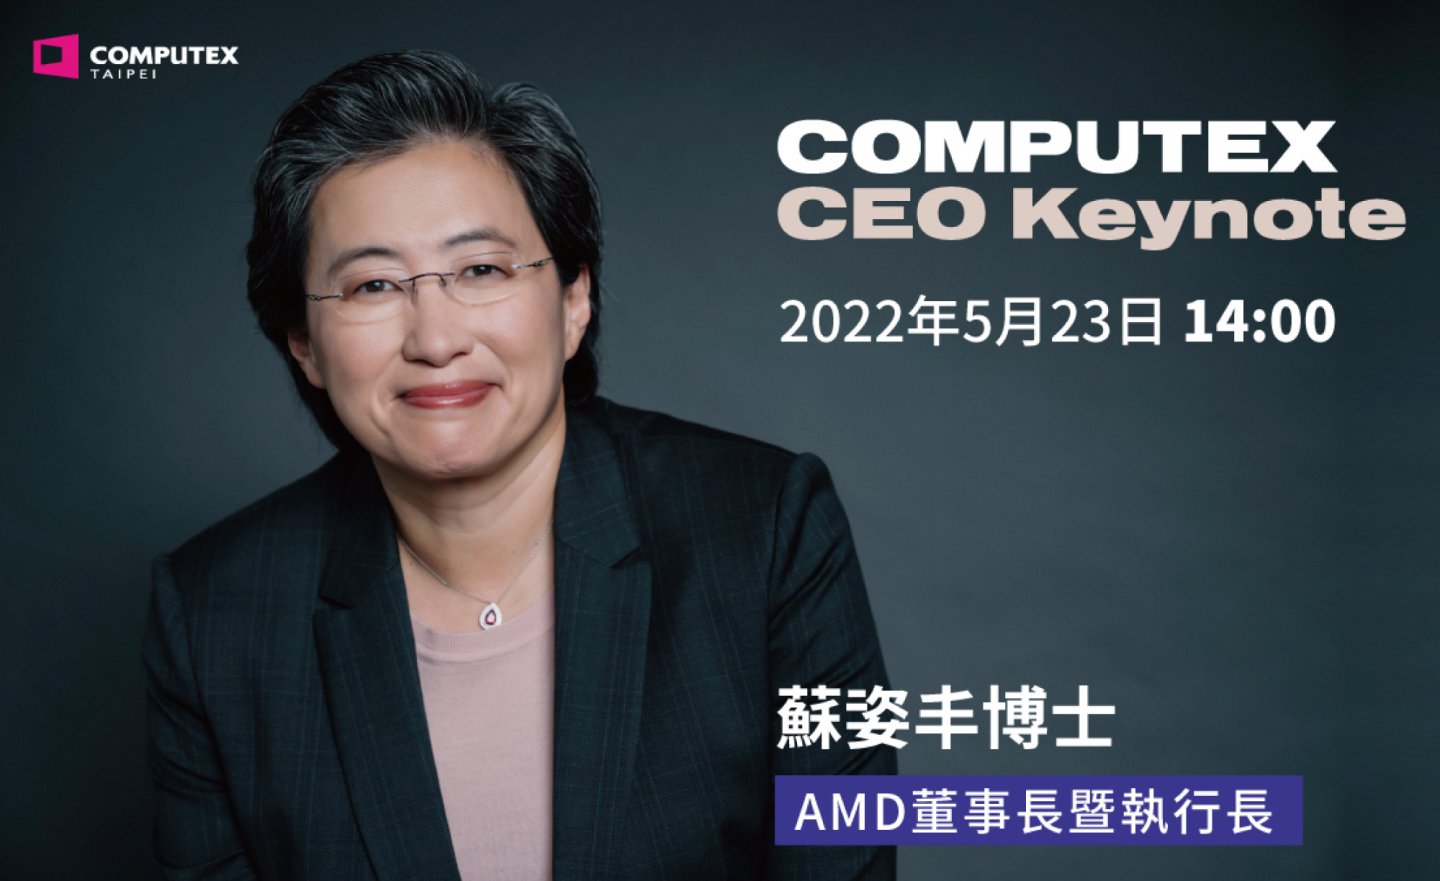 AMD 執行長蘇姿丰將在 2022 COMPUTEX CEO 發表主題演講，暢談高效能運算體驗